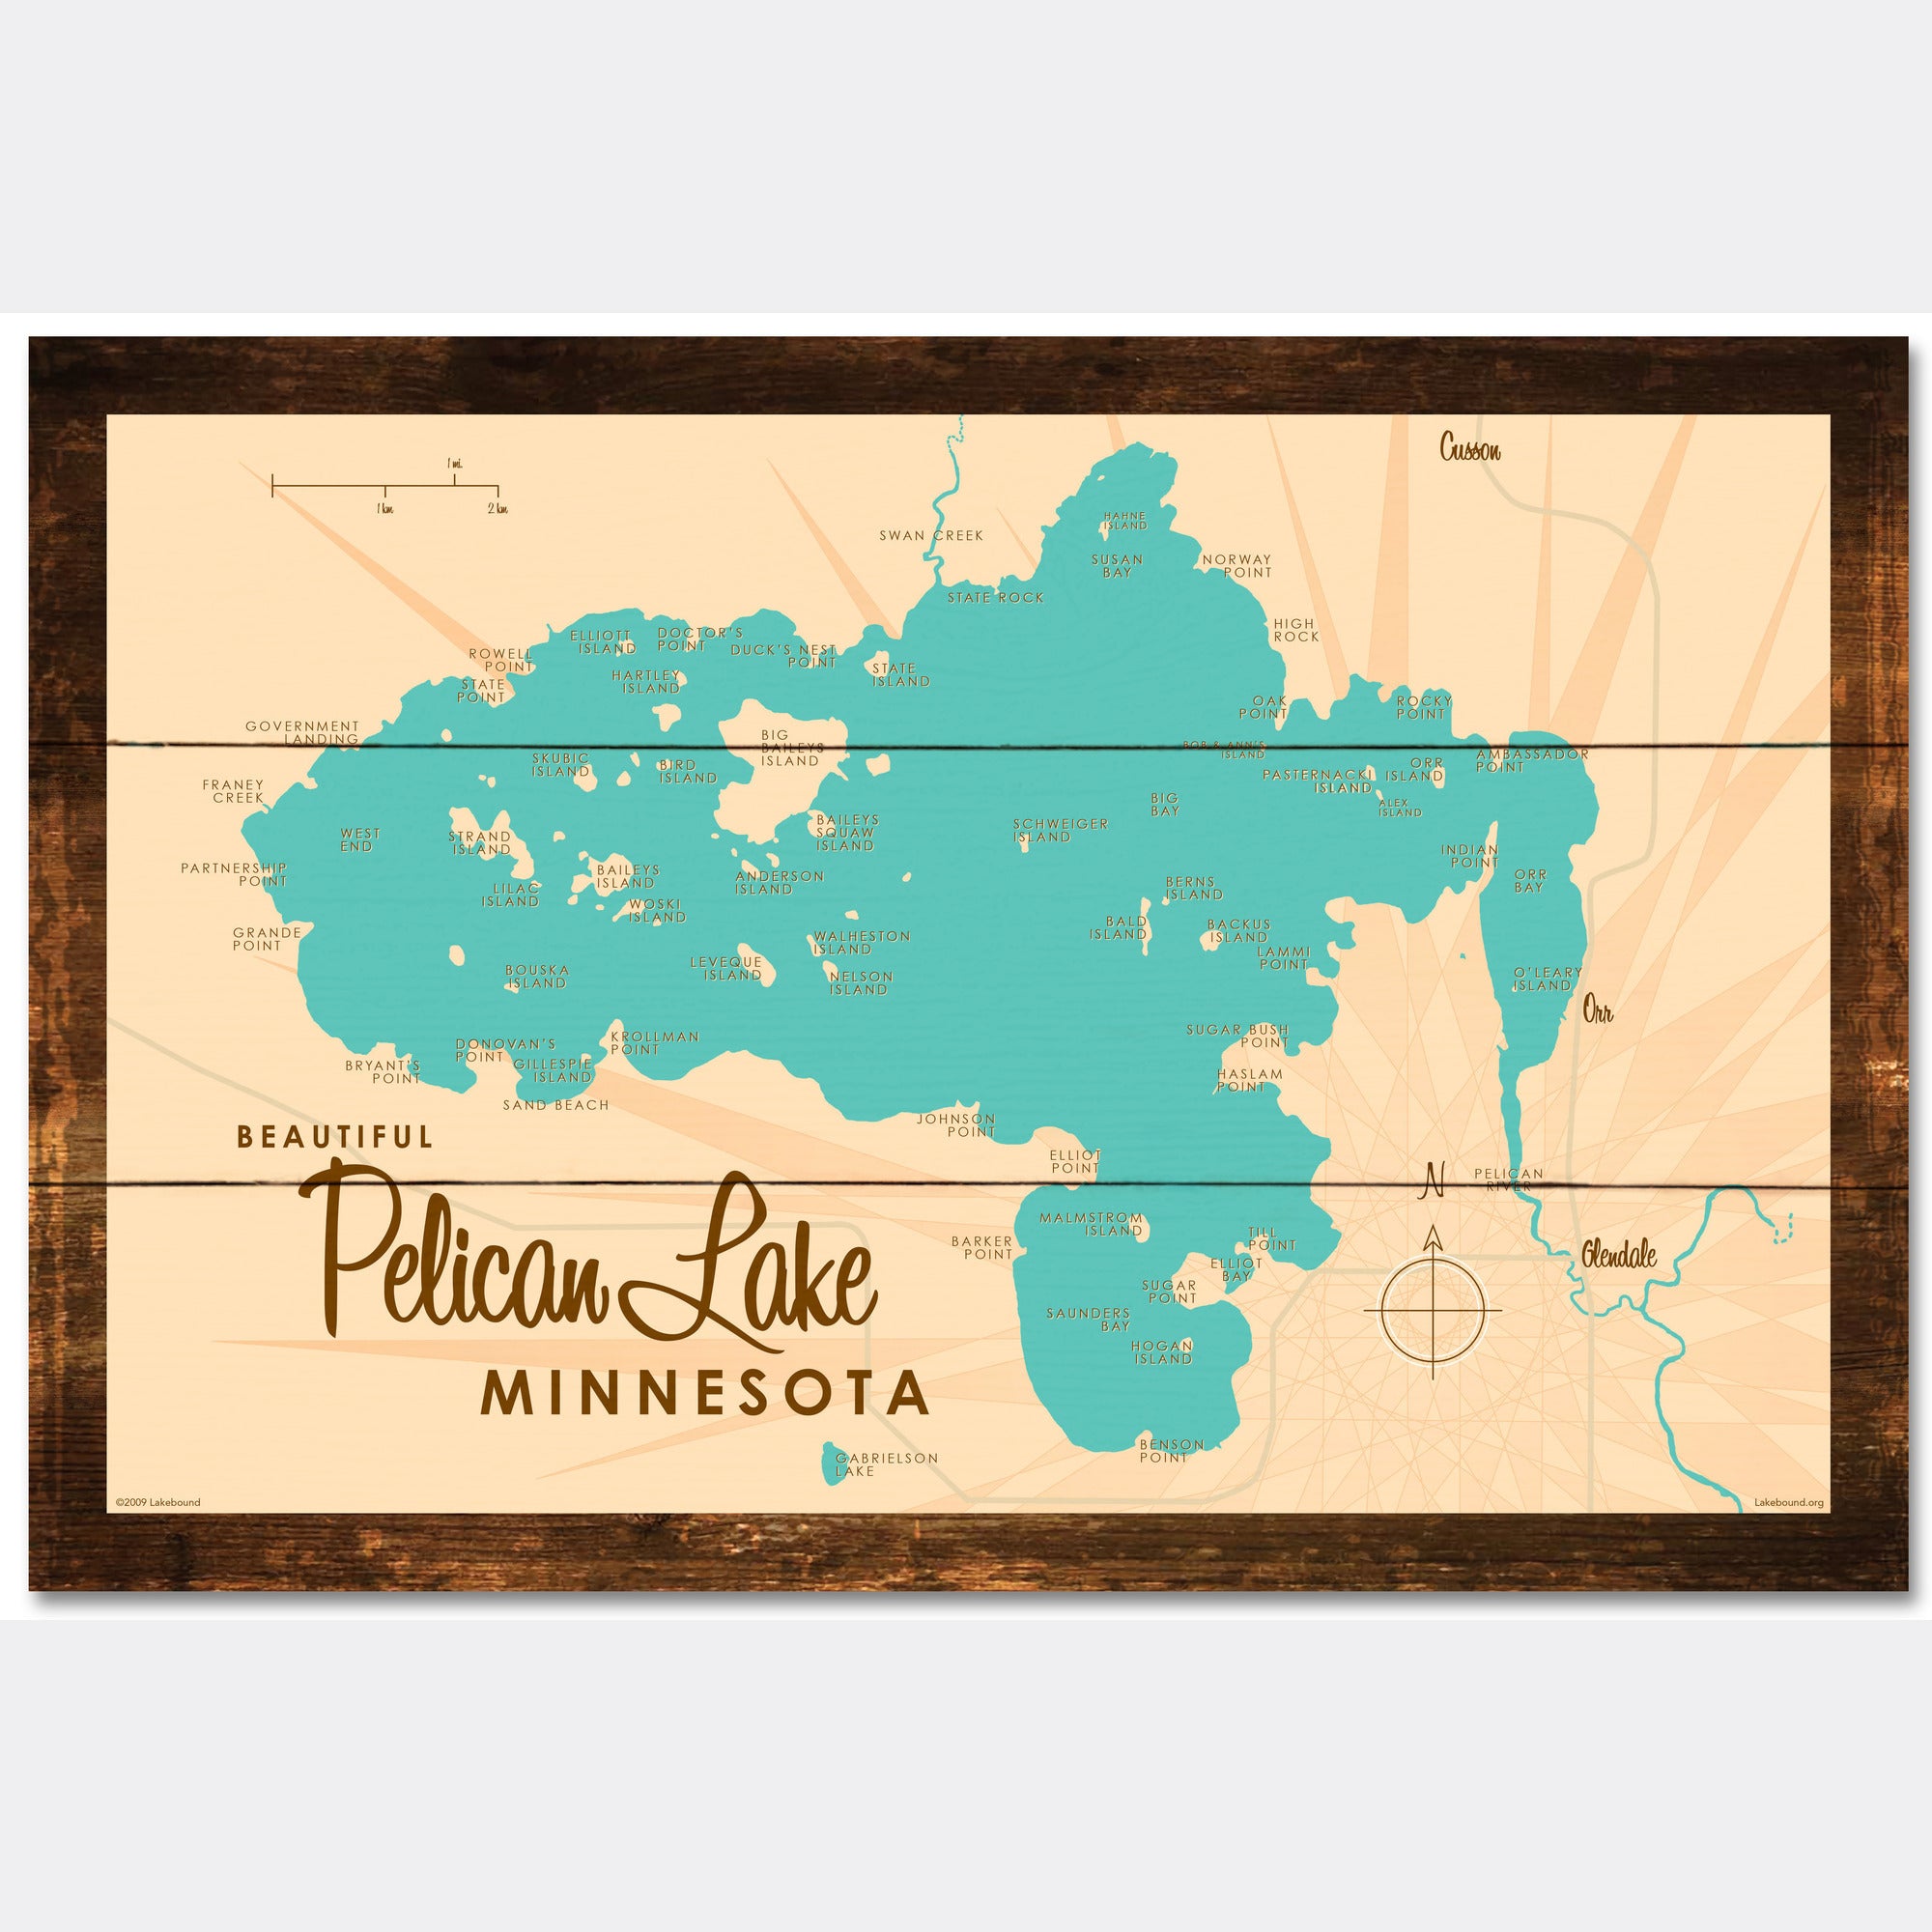 Pelican Lake St. Louis County Minnesota, Rustic Wood Sign Map Art